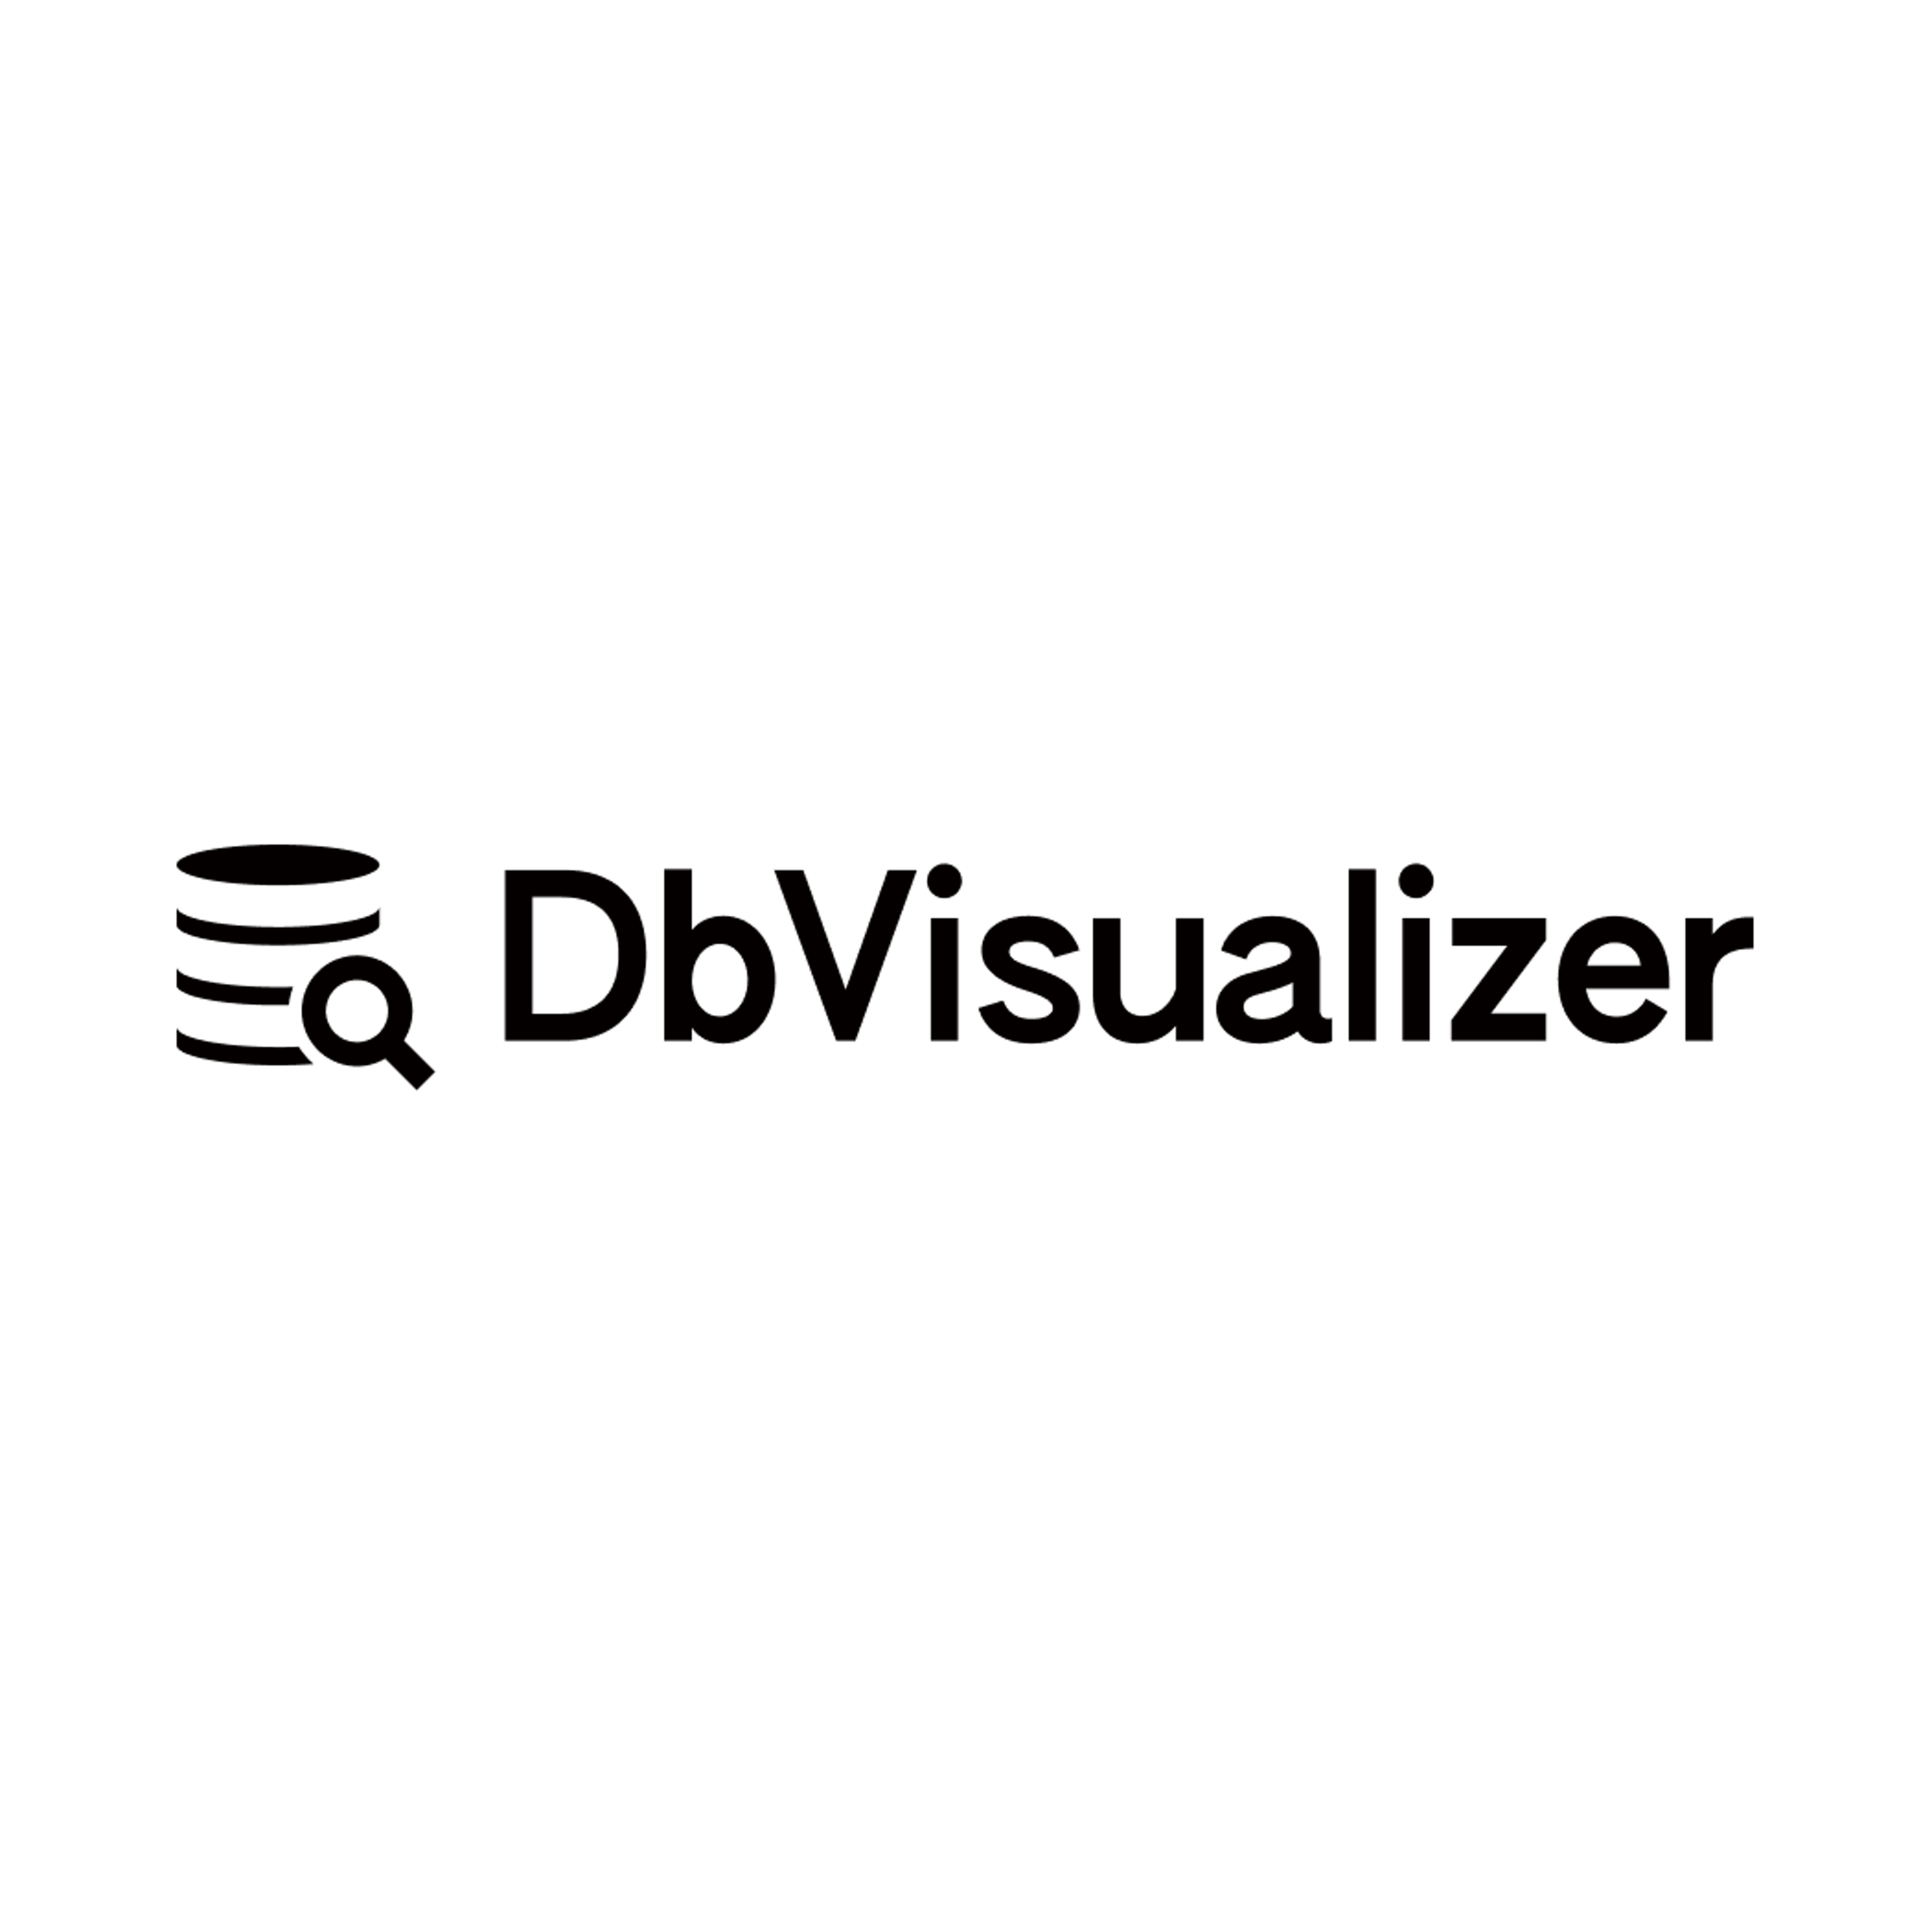 DbVisualizer Logo